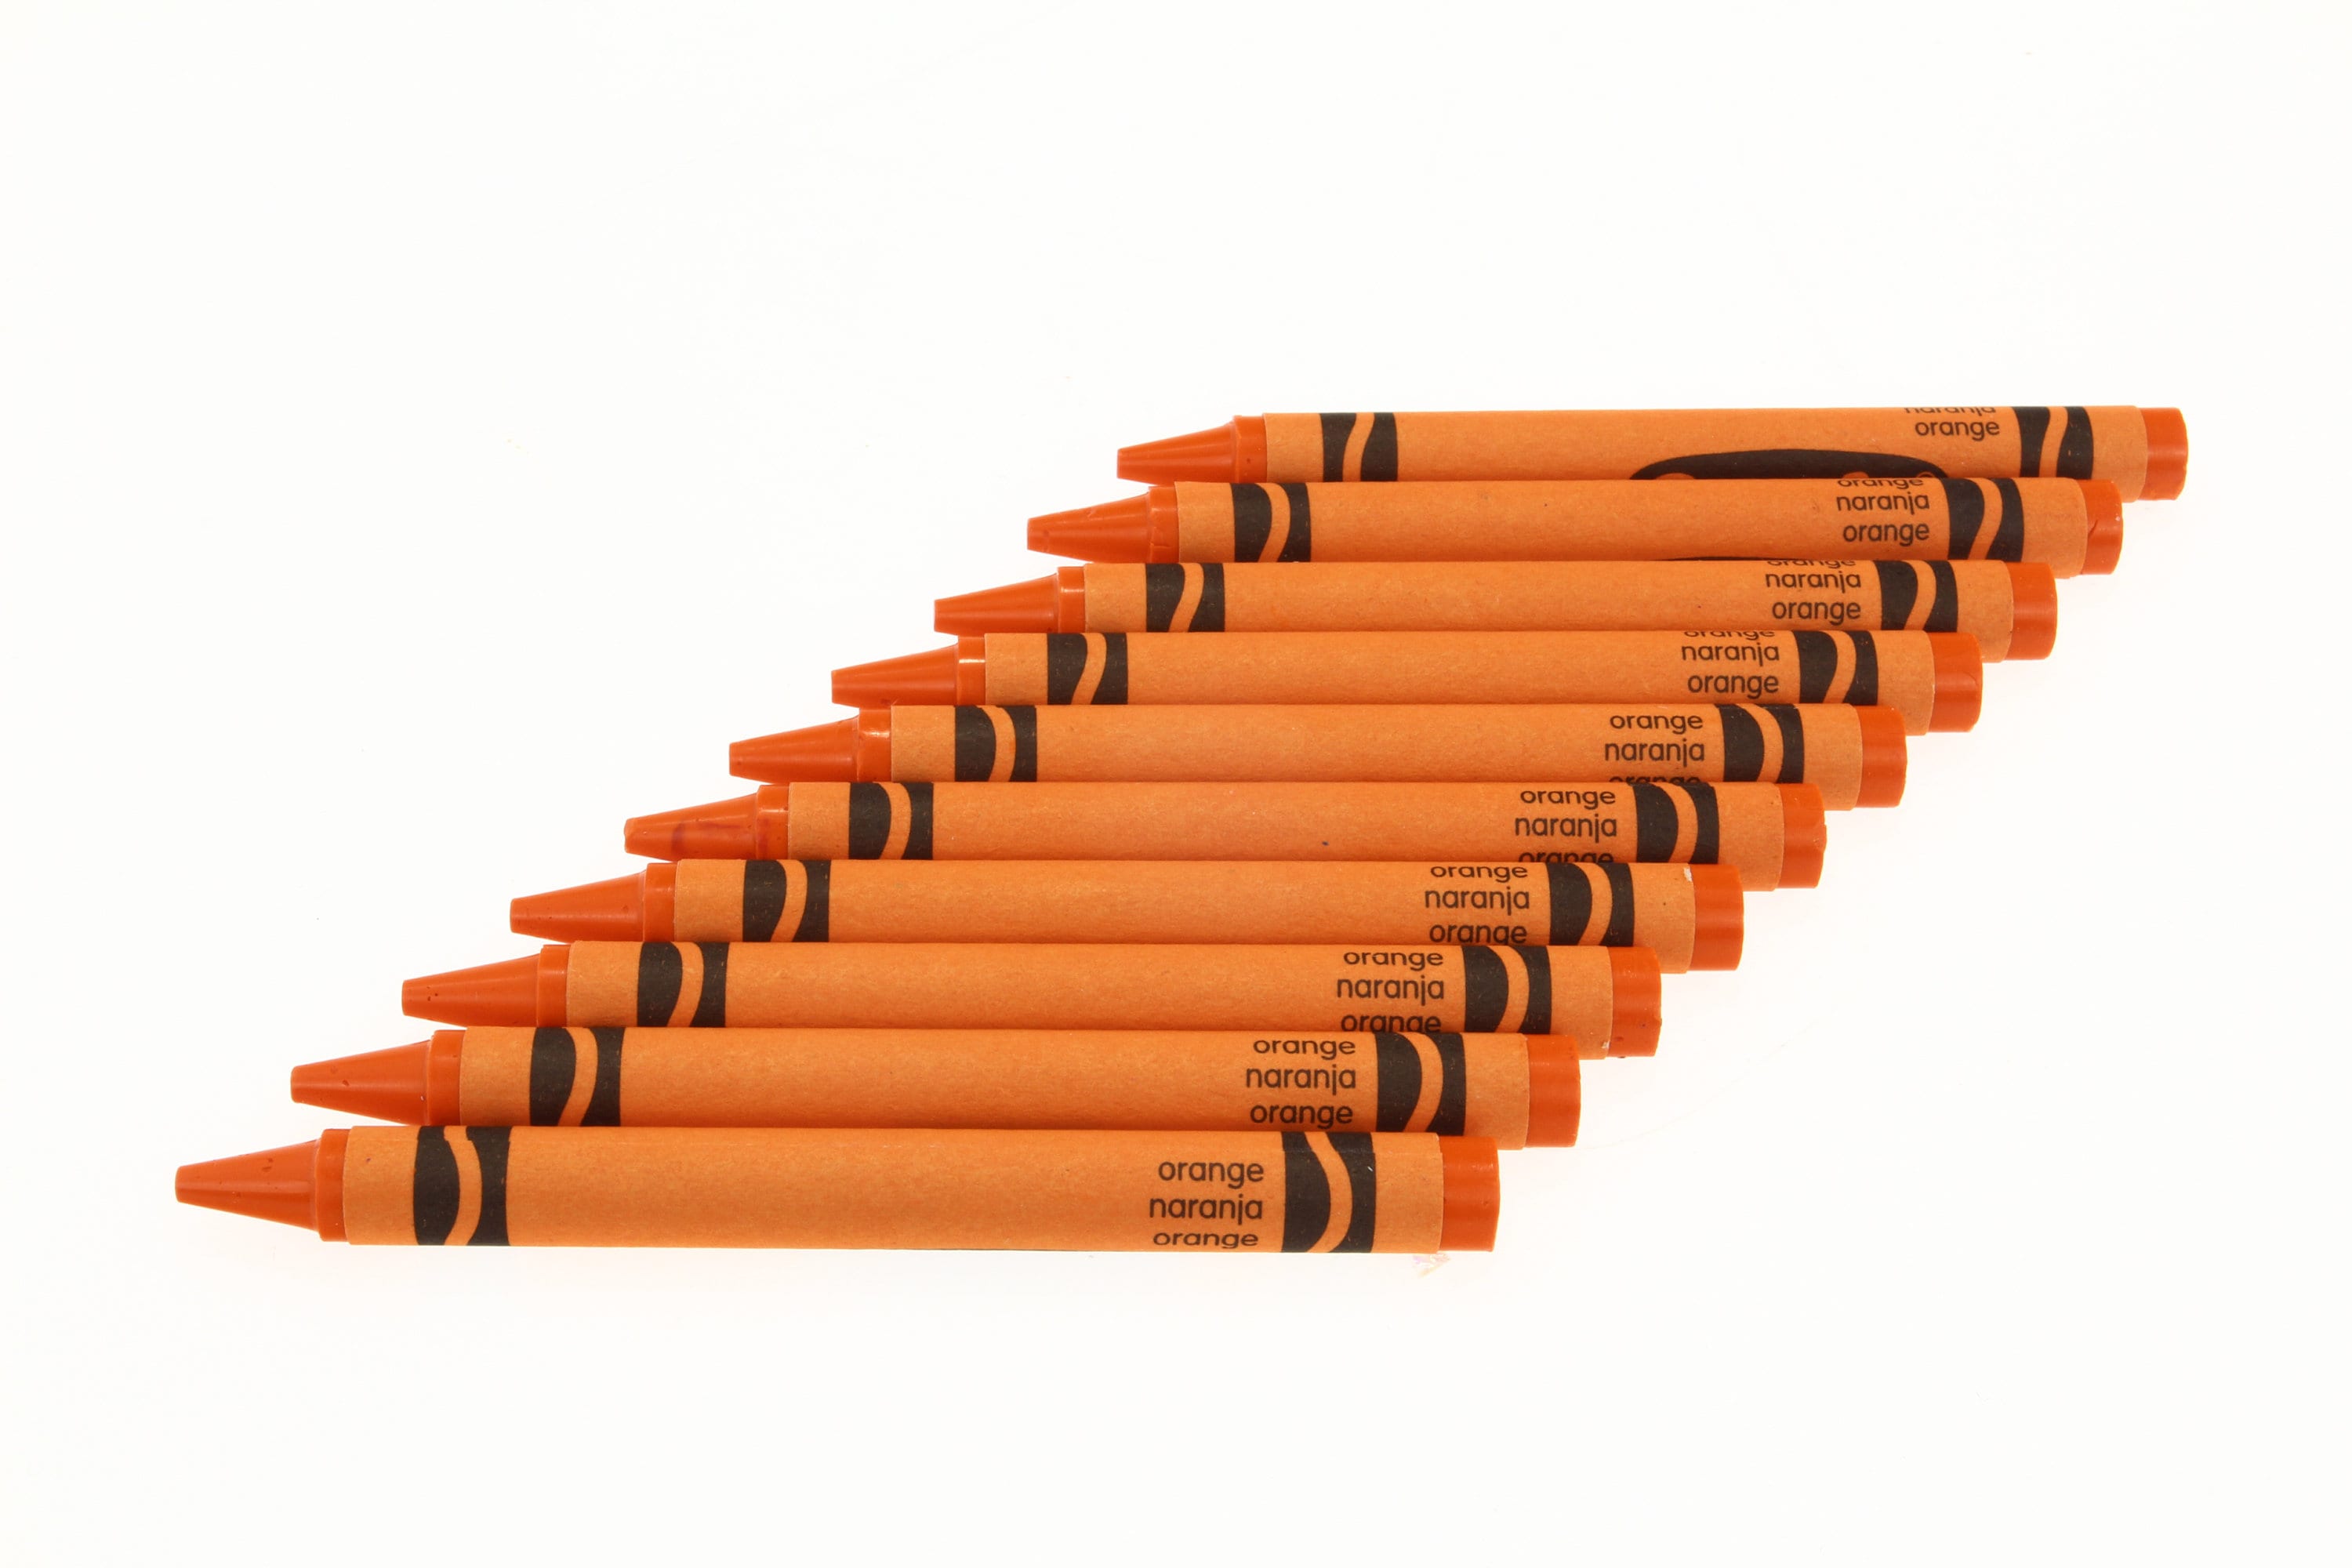 Orange crayola crayons pack